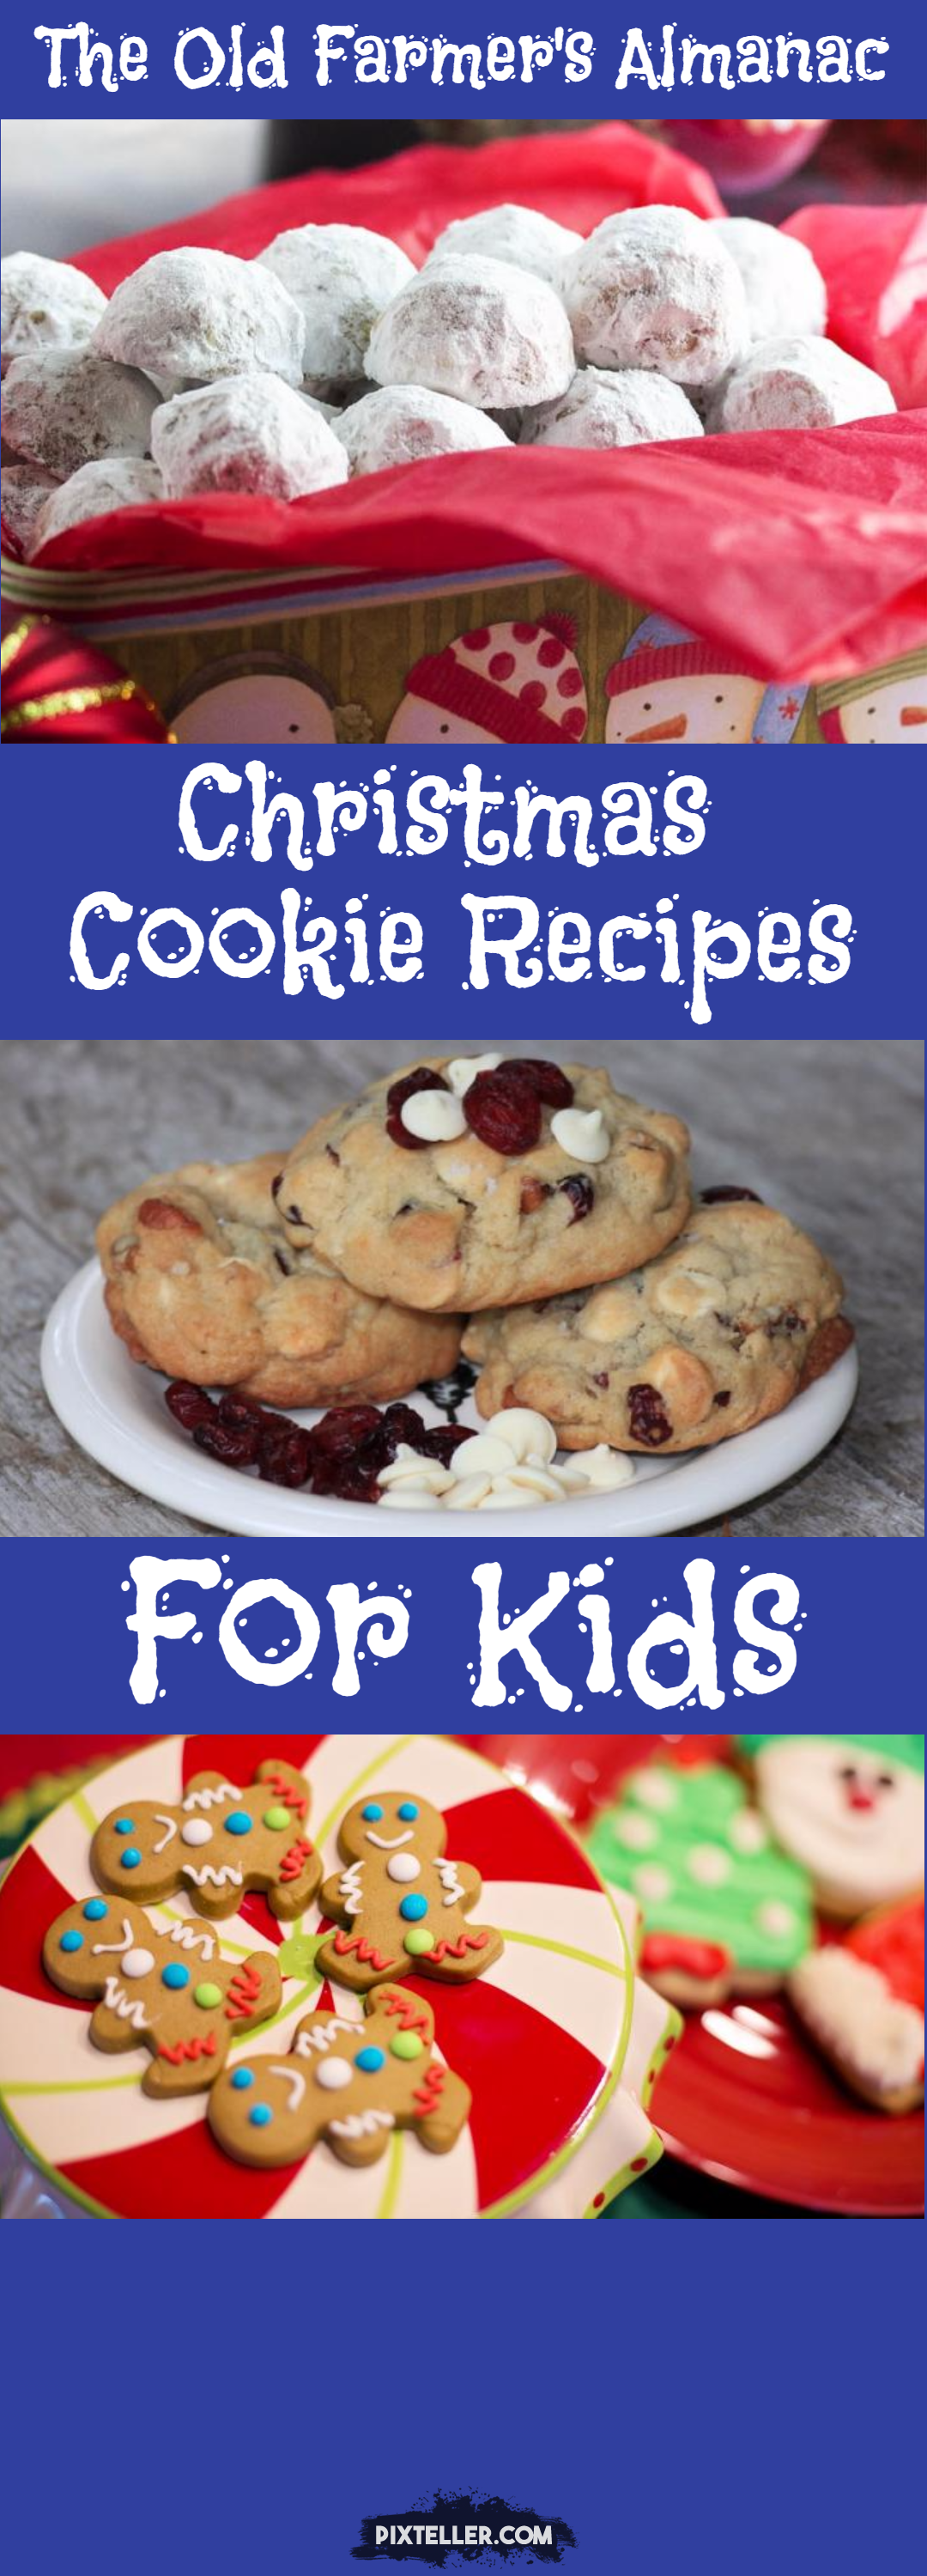 OFA 12-14-16 Children Cookie Design 